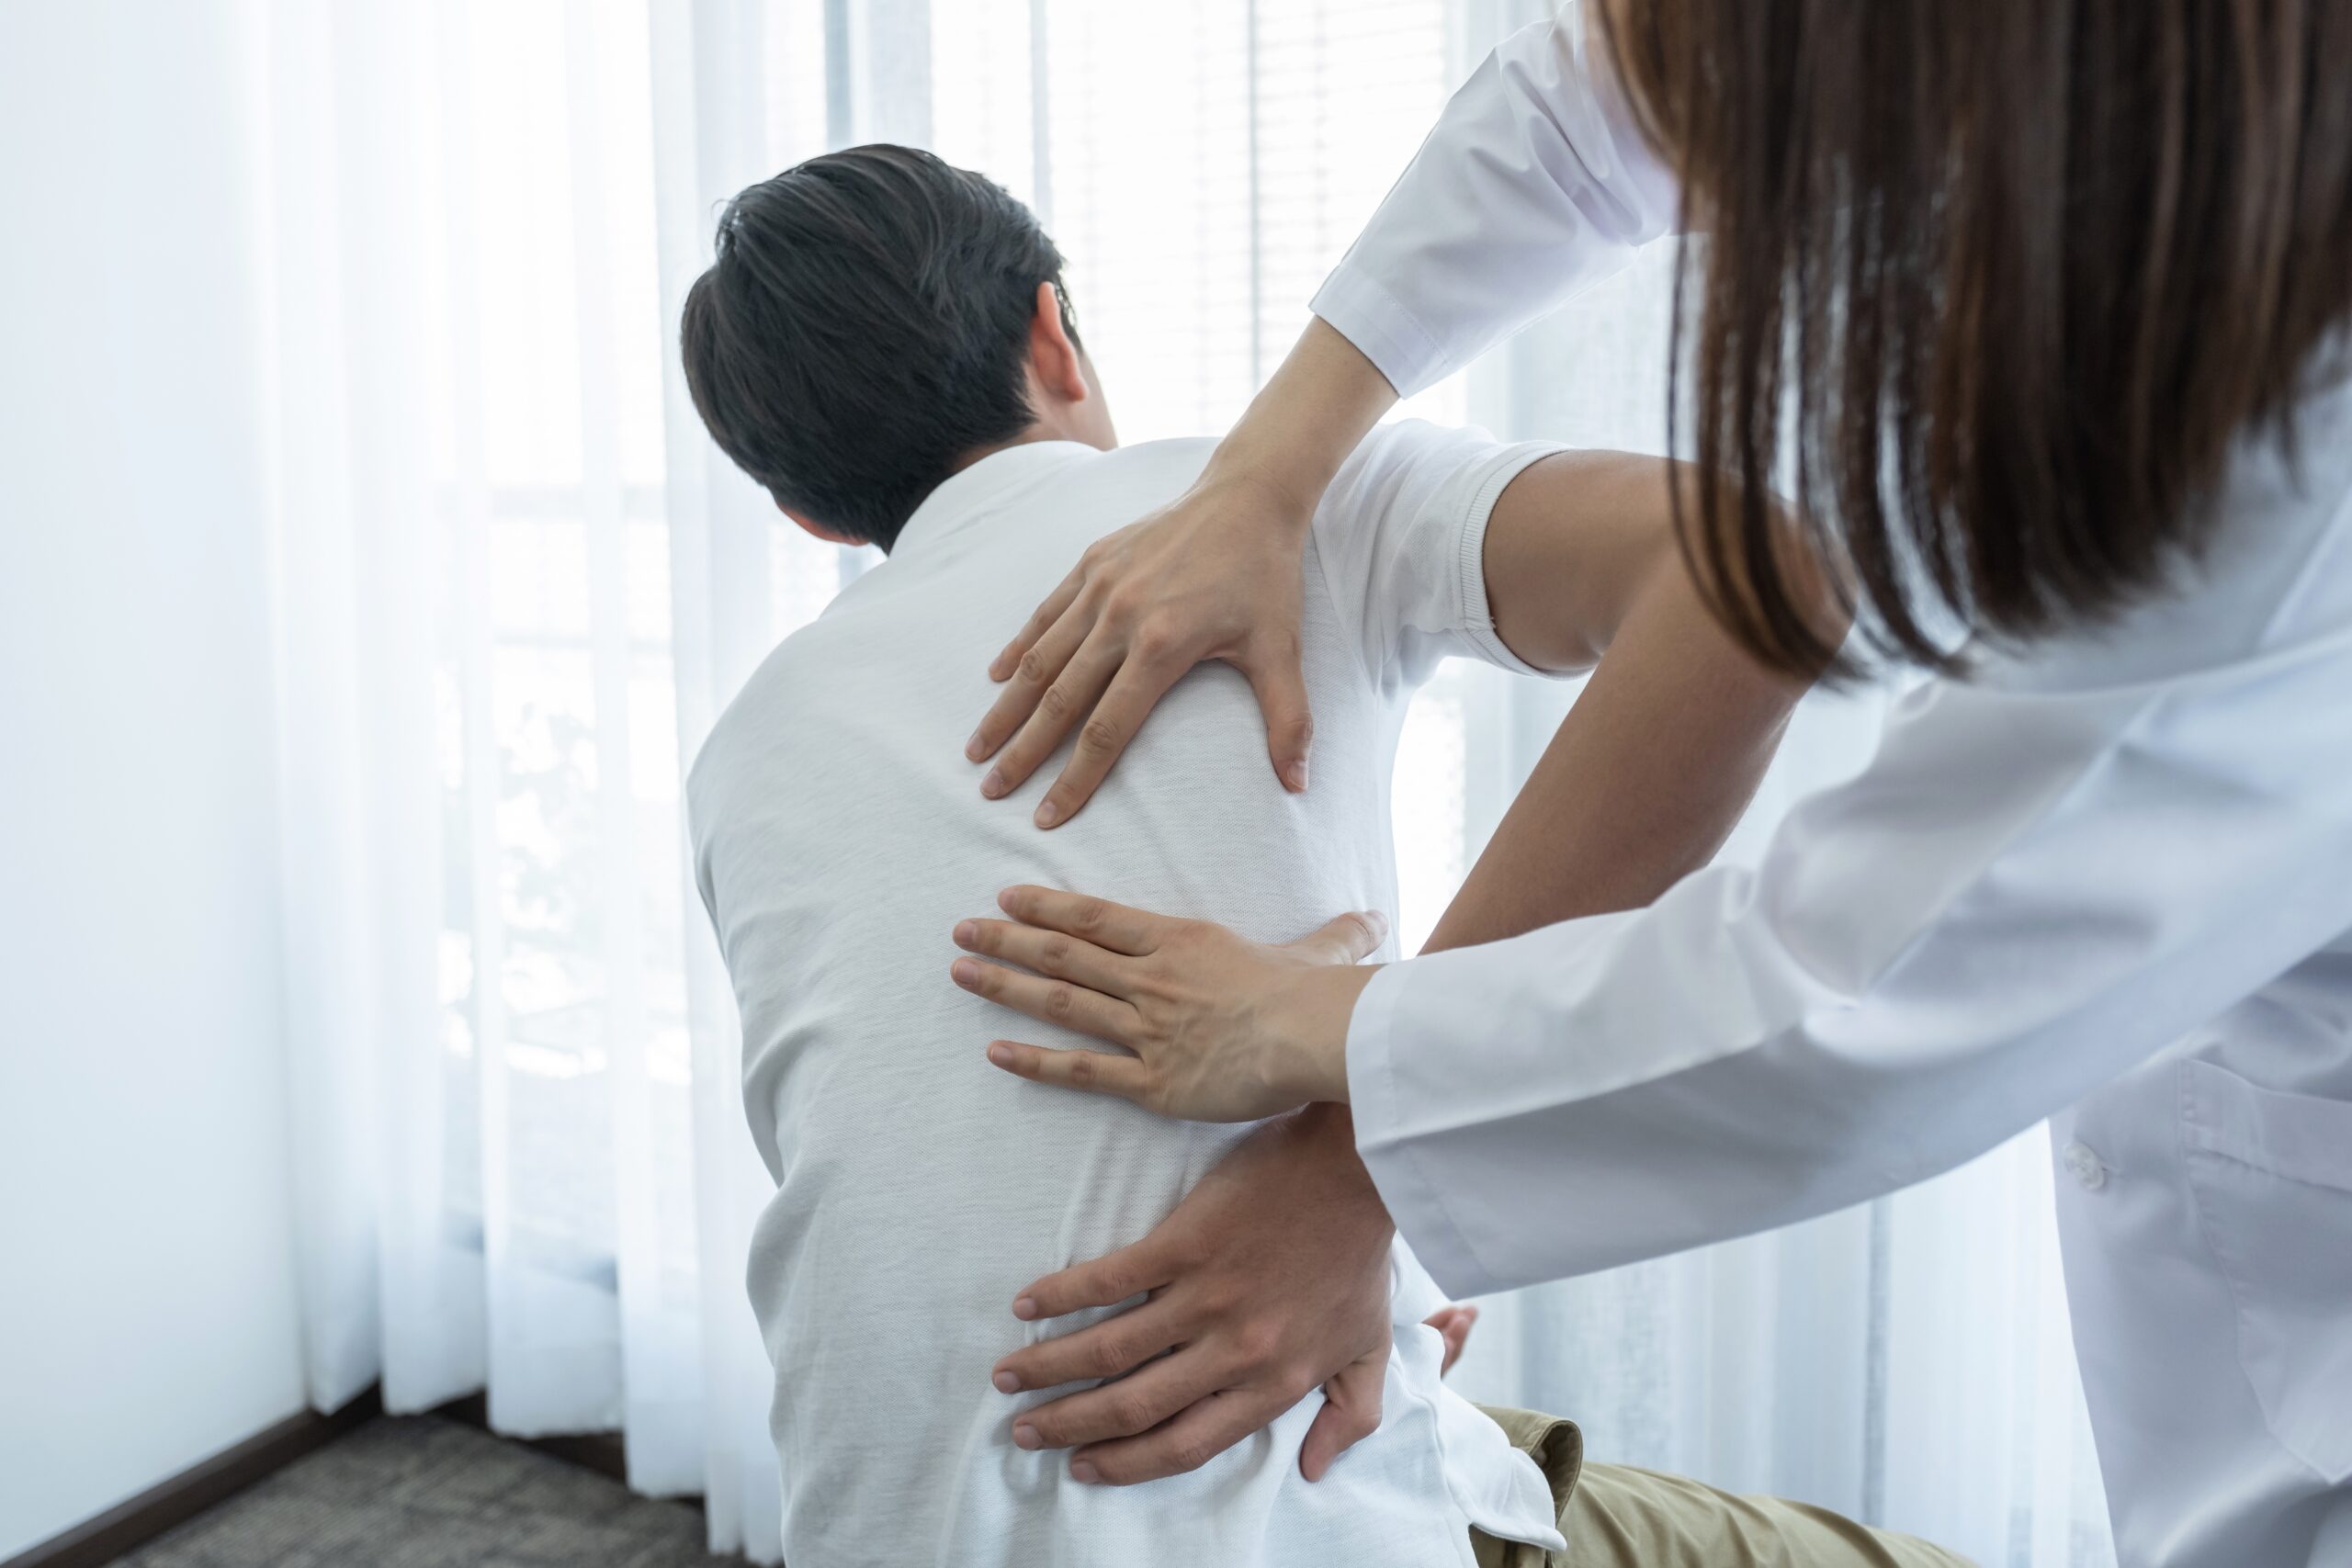 How to Avoid Back Pain While Sleeping - Desert Institute for Spine Care